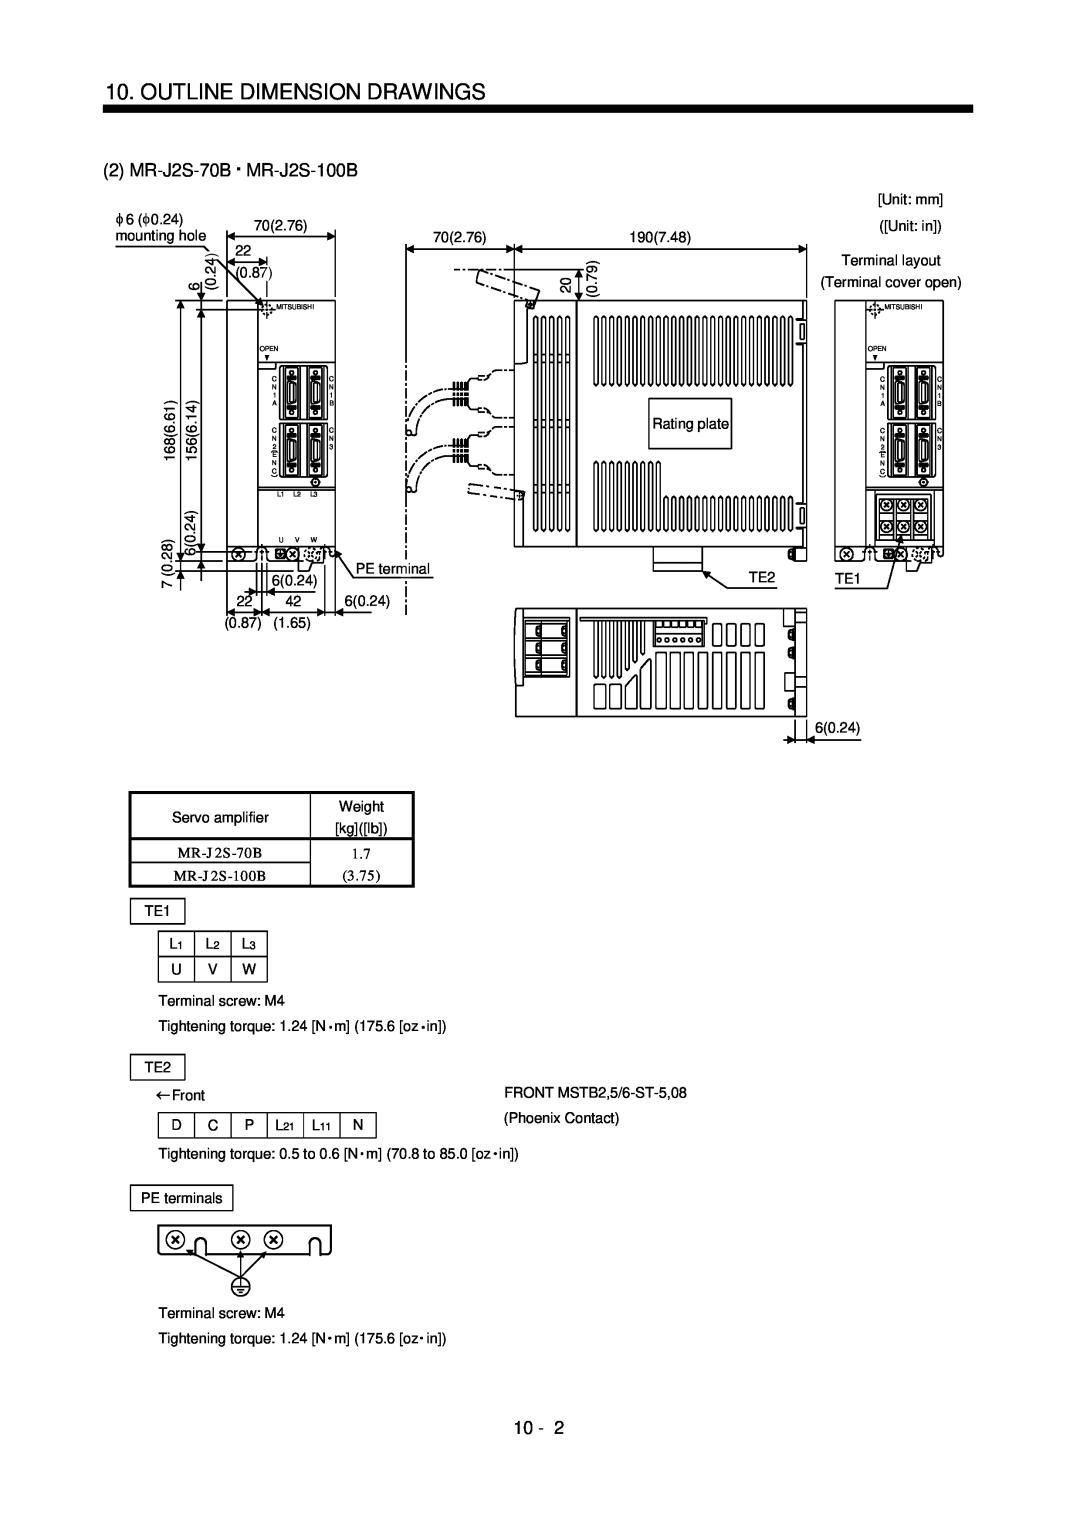 Bose MR-J2S- B instruction manual Outline Dimension Drawings, MR-J2S-70B, MR-J2S-100B 